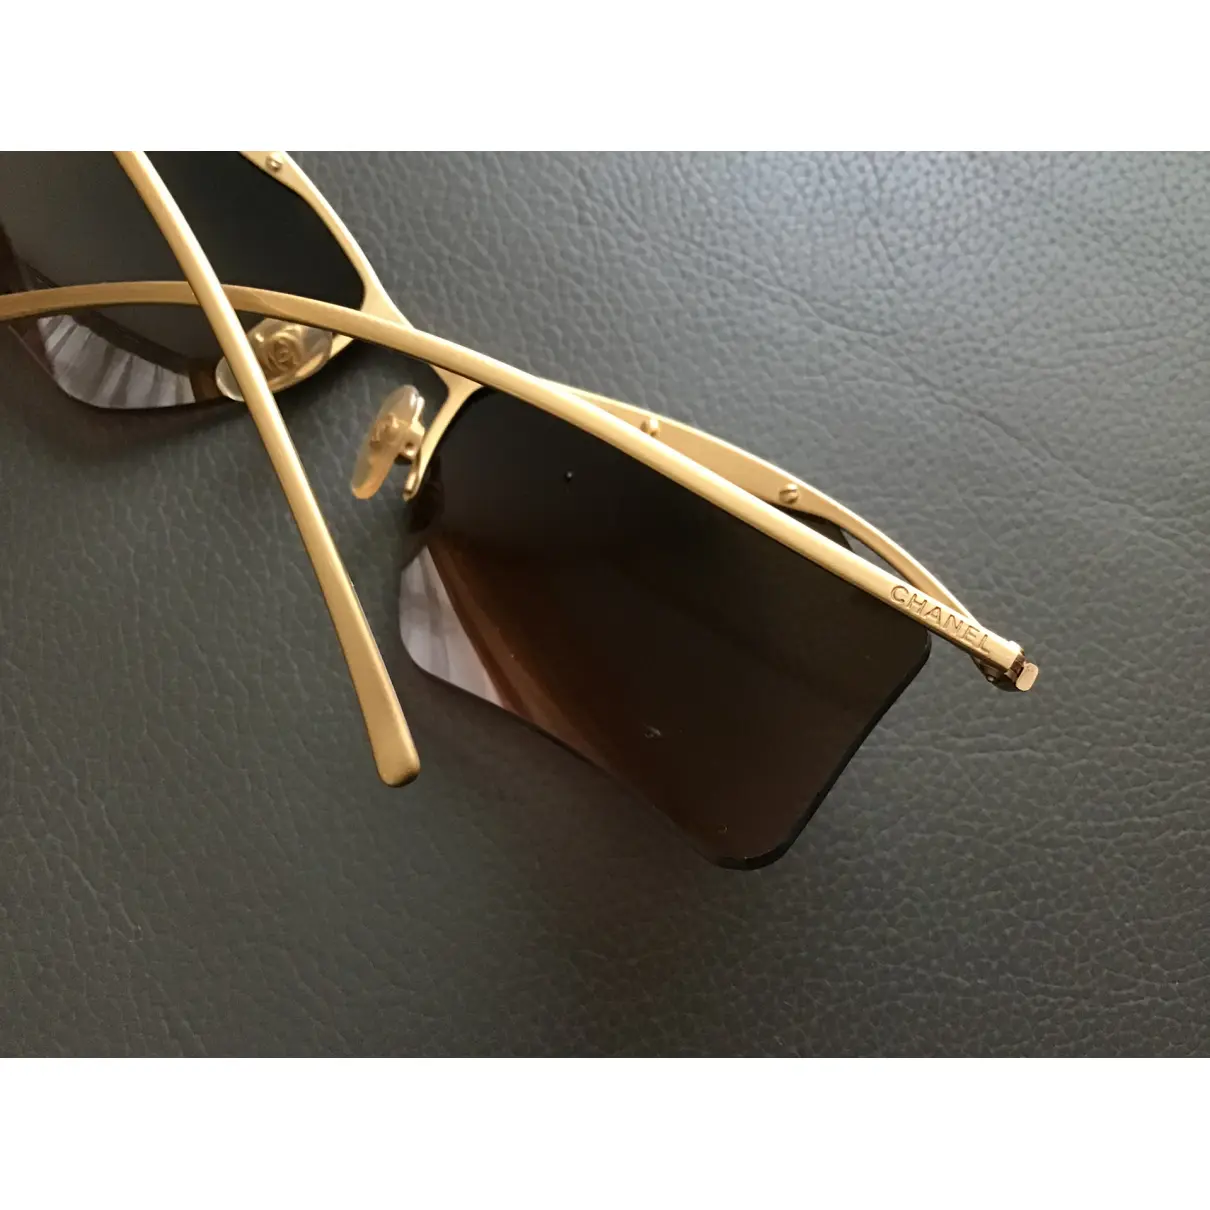 Buy Chanel Sunglasses online